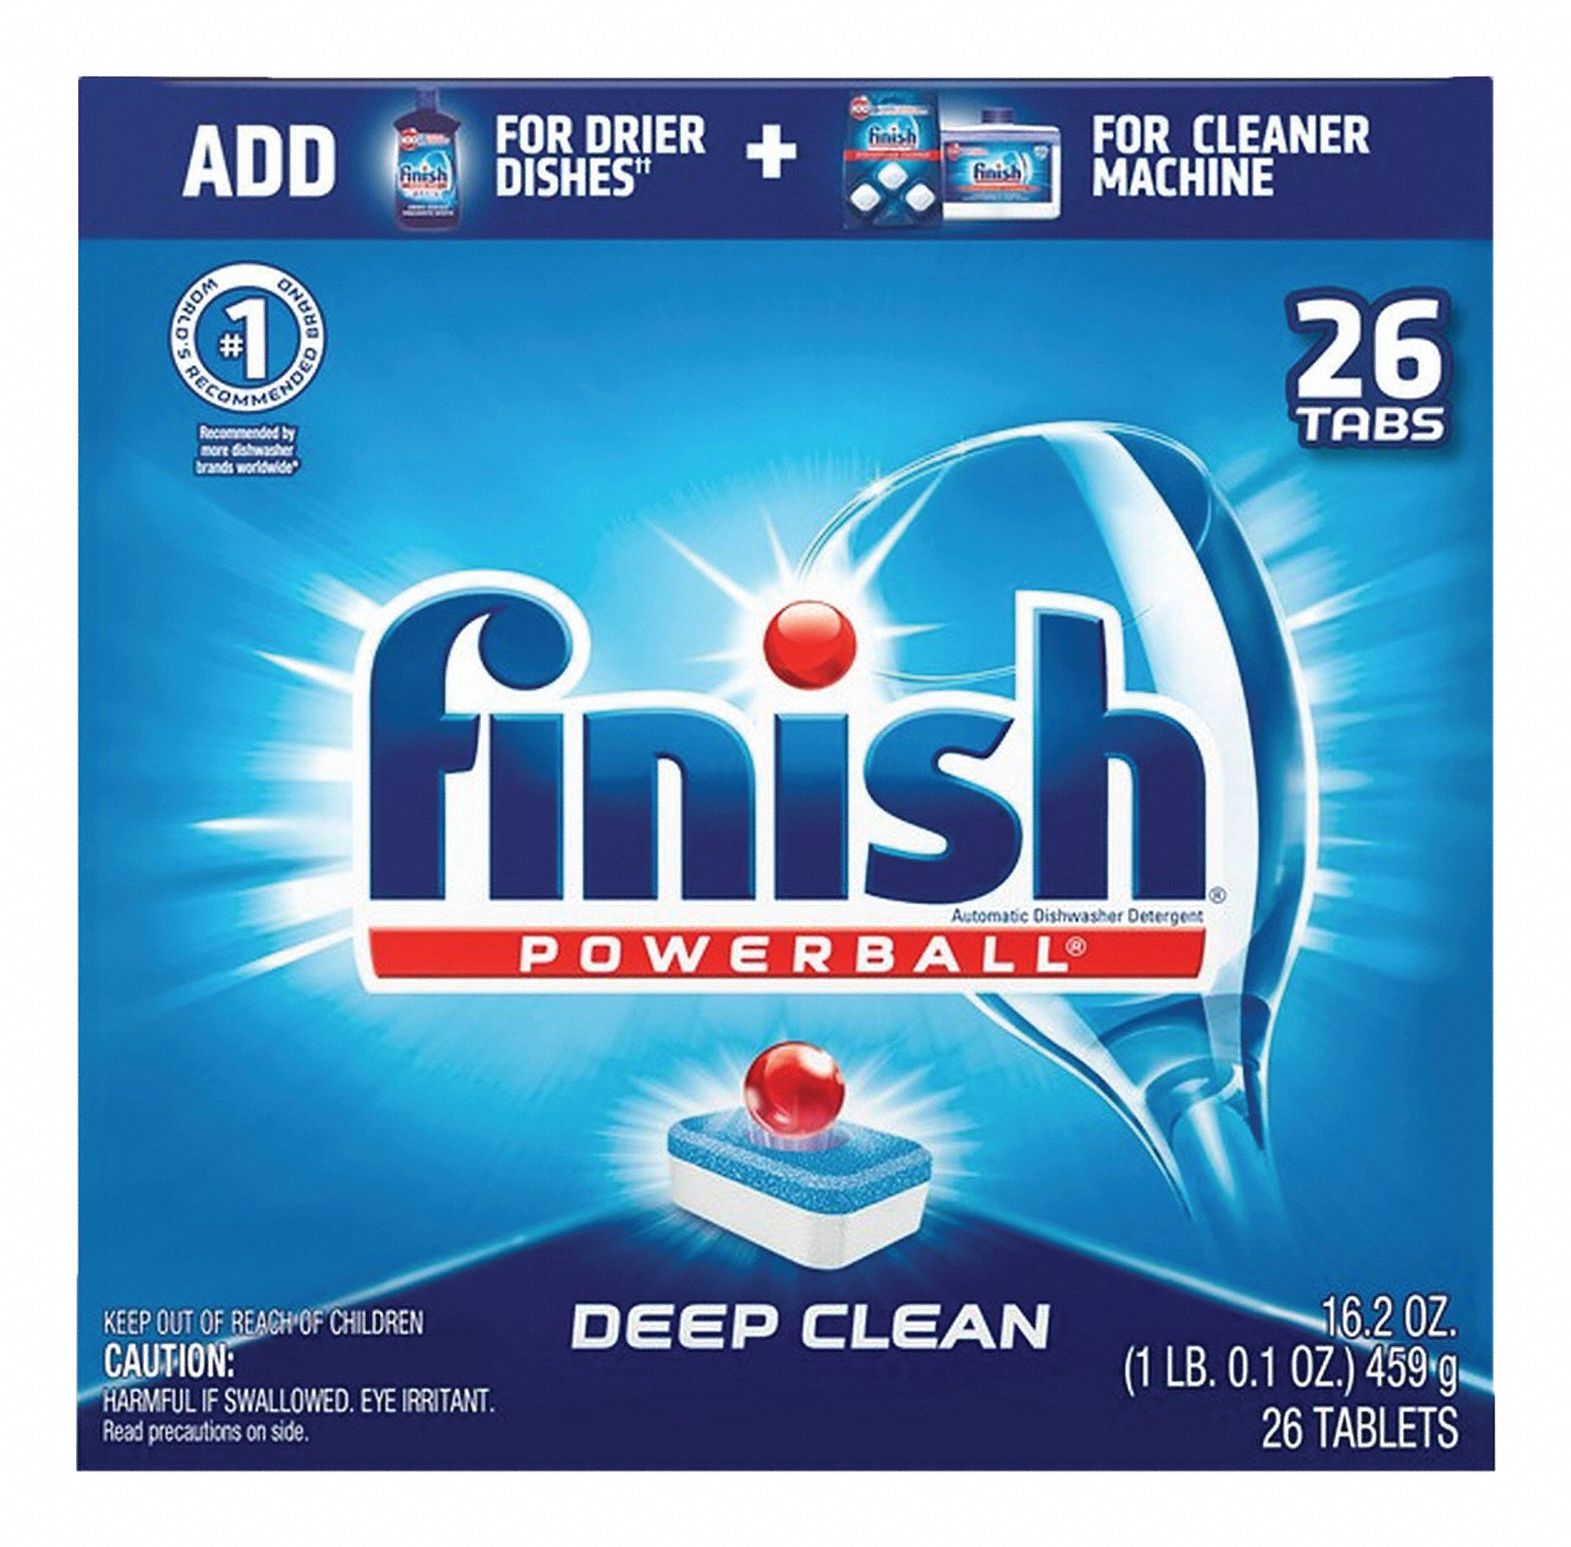 Dishwasher Detergent: Pacs, Box, 20 ct, Fresh, 8 PK